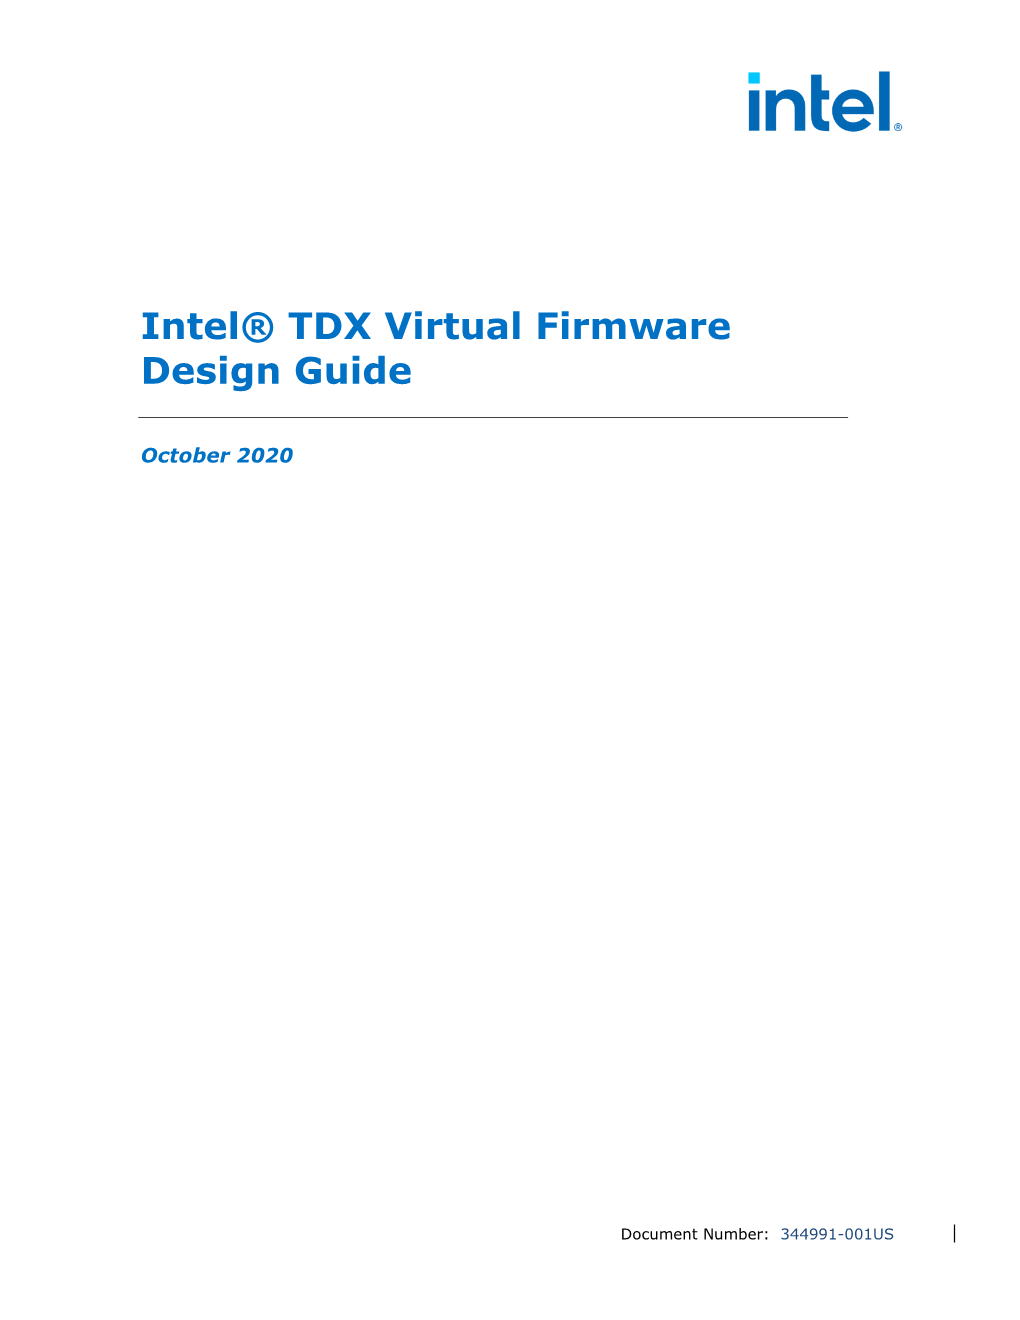 Intel® TDX Virtual Firmware Design Guide